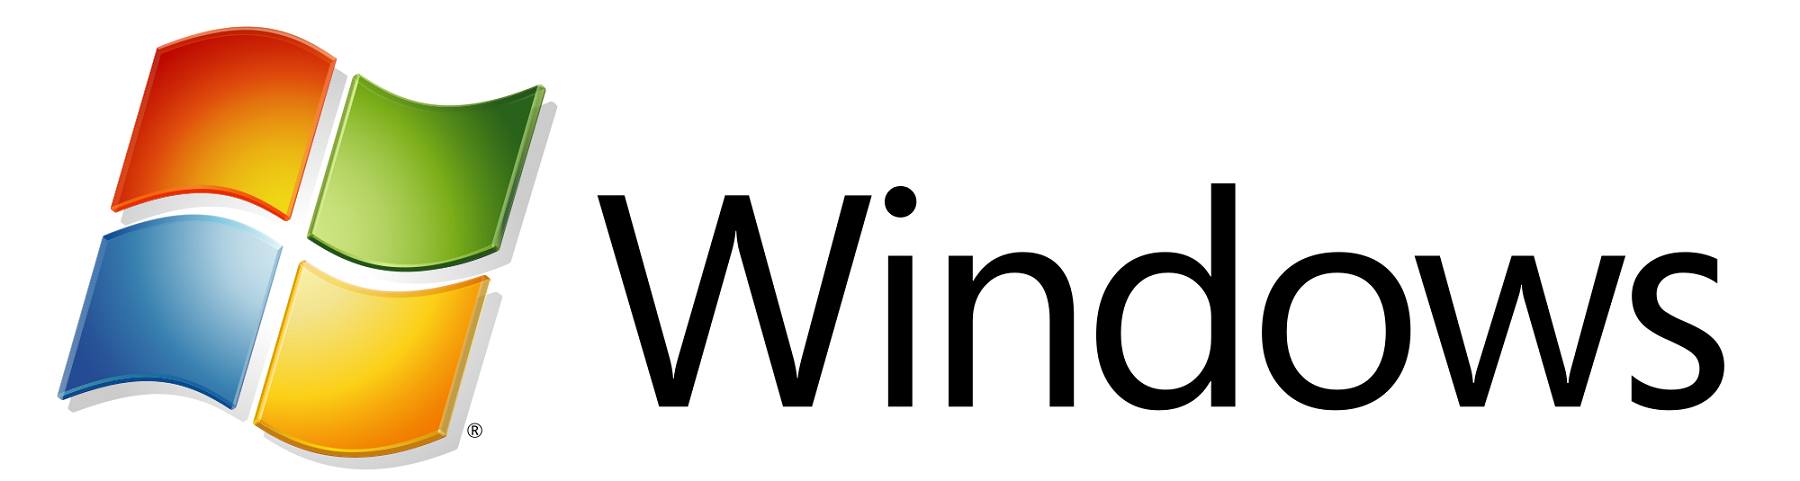 Windows Logo - Microsoft Windows, Transparent background PNG HD thumbnail